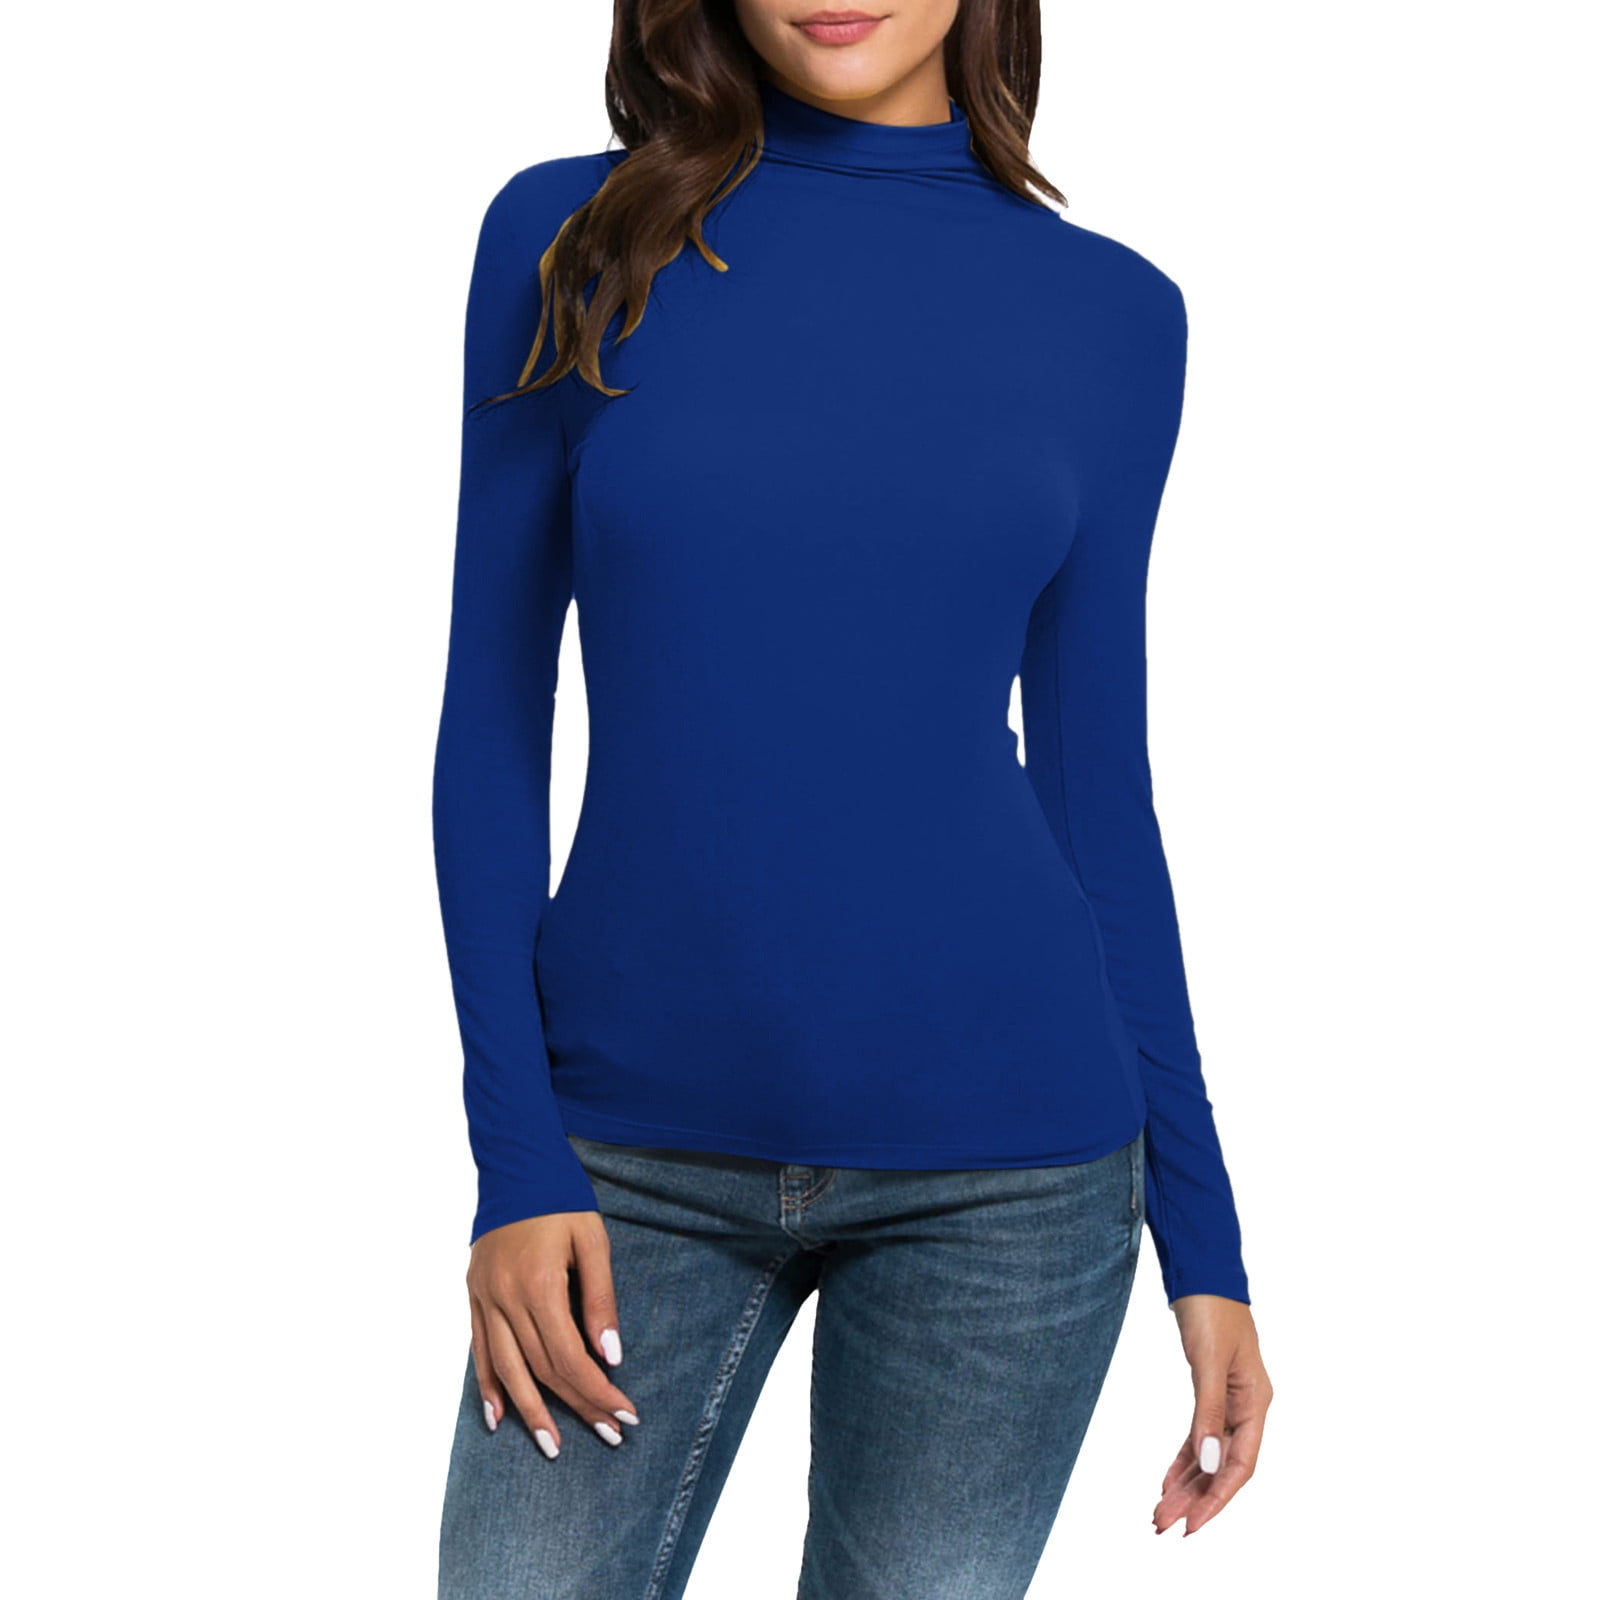 Hfyihgf Women's Mock Turtleneck Long Sleeve Pullover Tops Slim Fit Basic  Stretchy Lightweight Layer Soft T-Shirts（Purple,L)